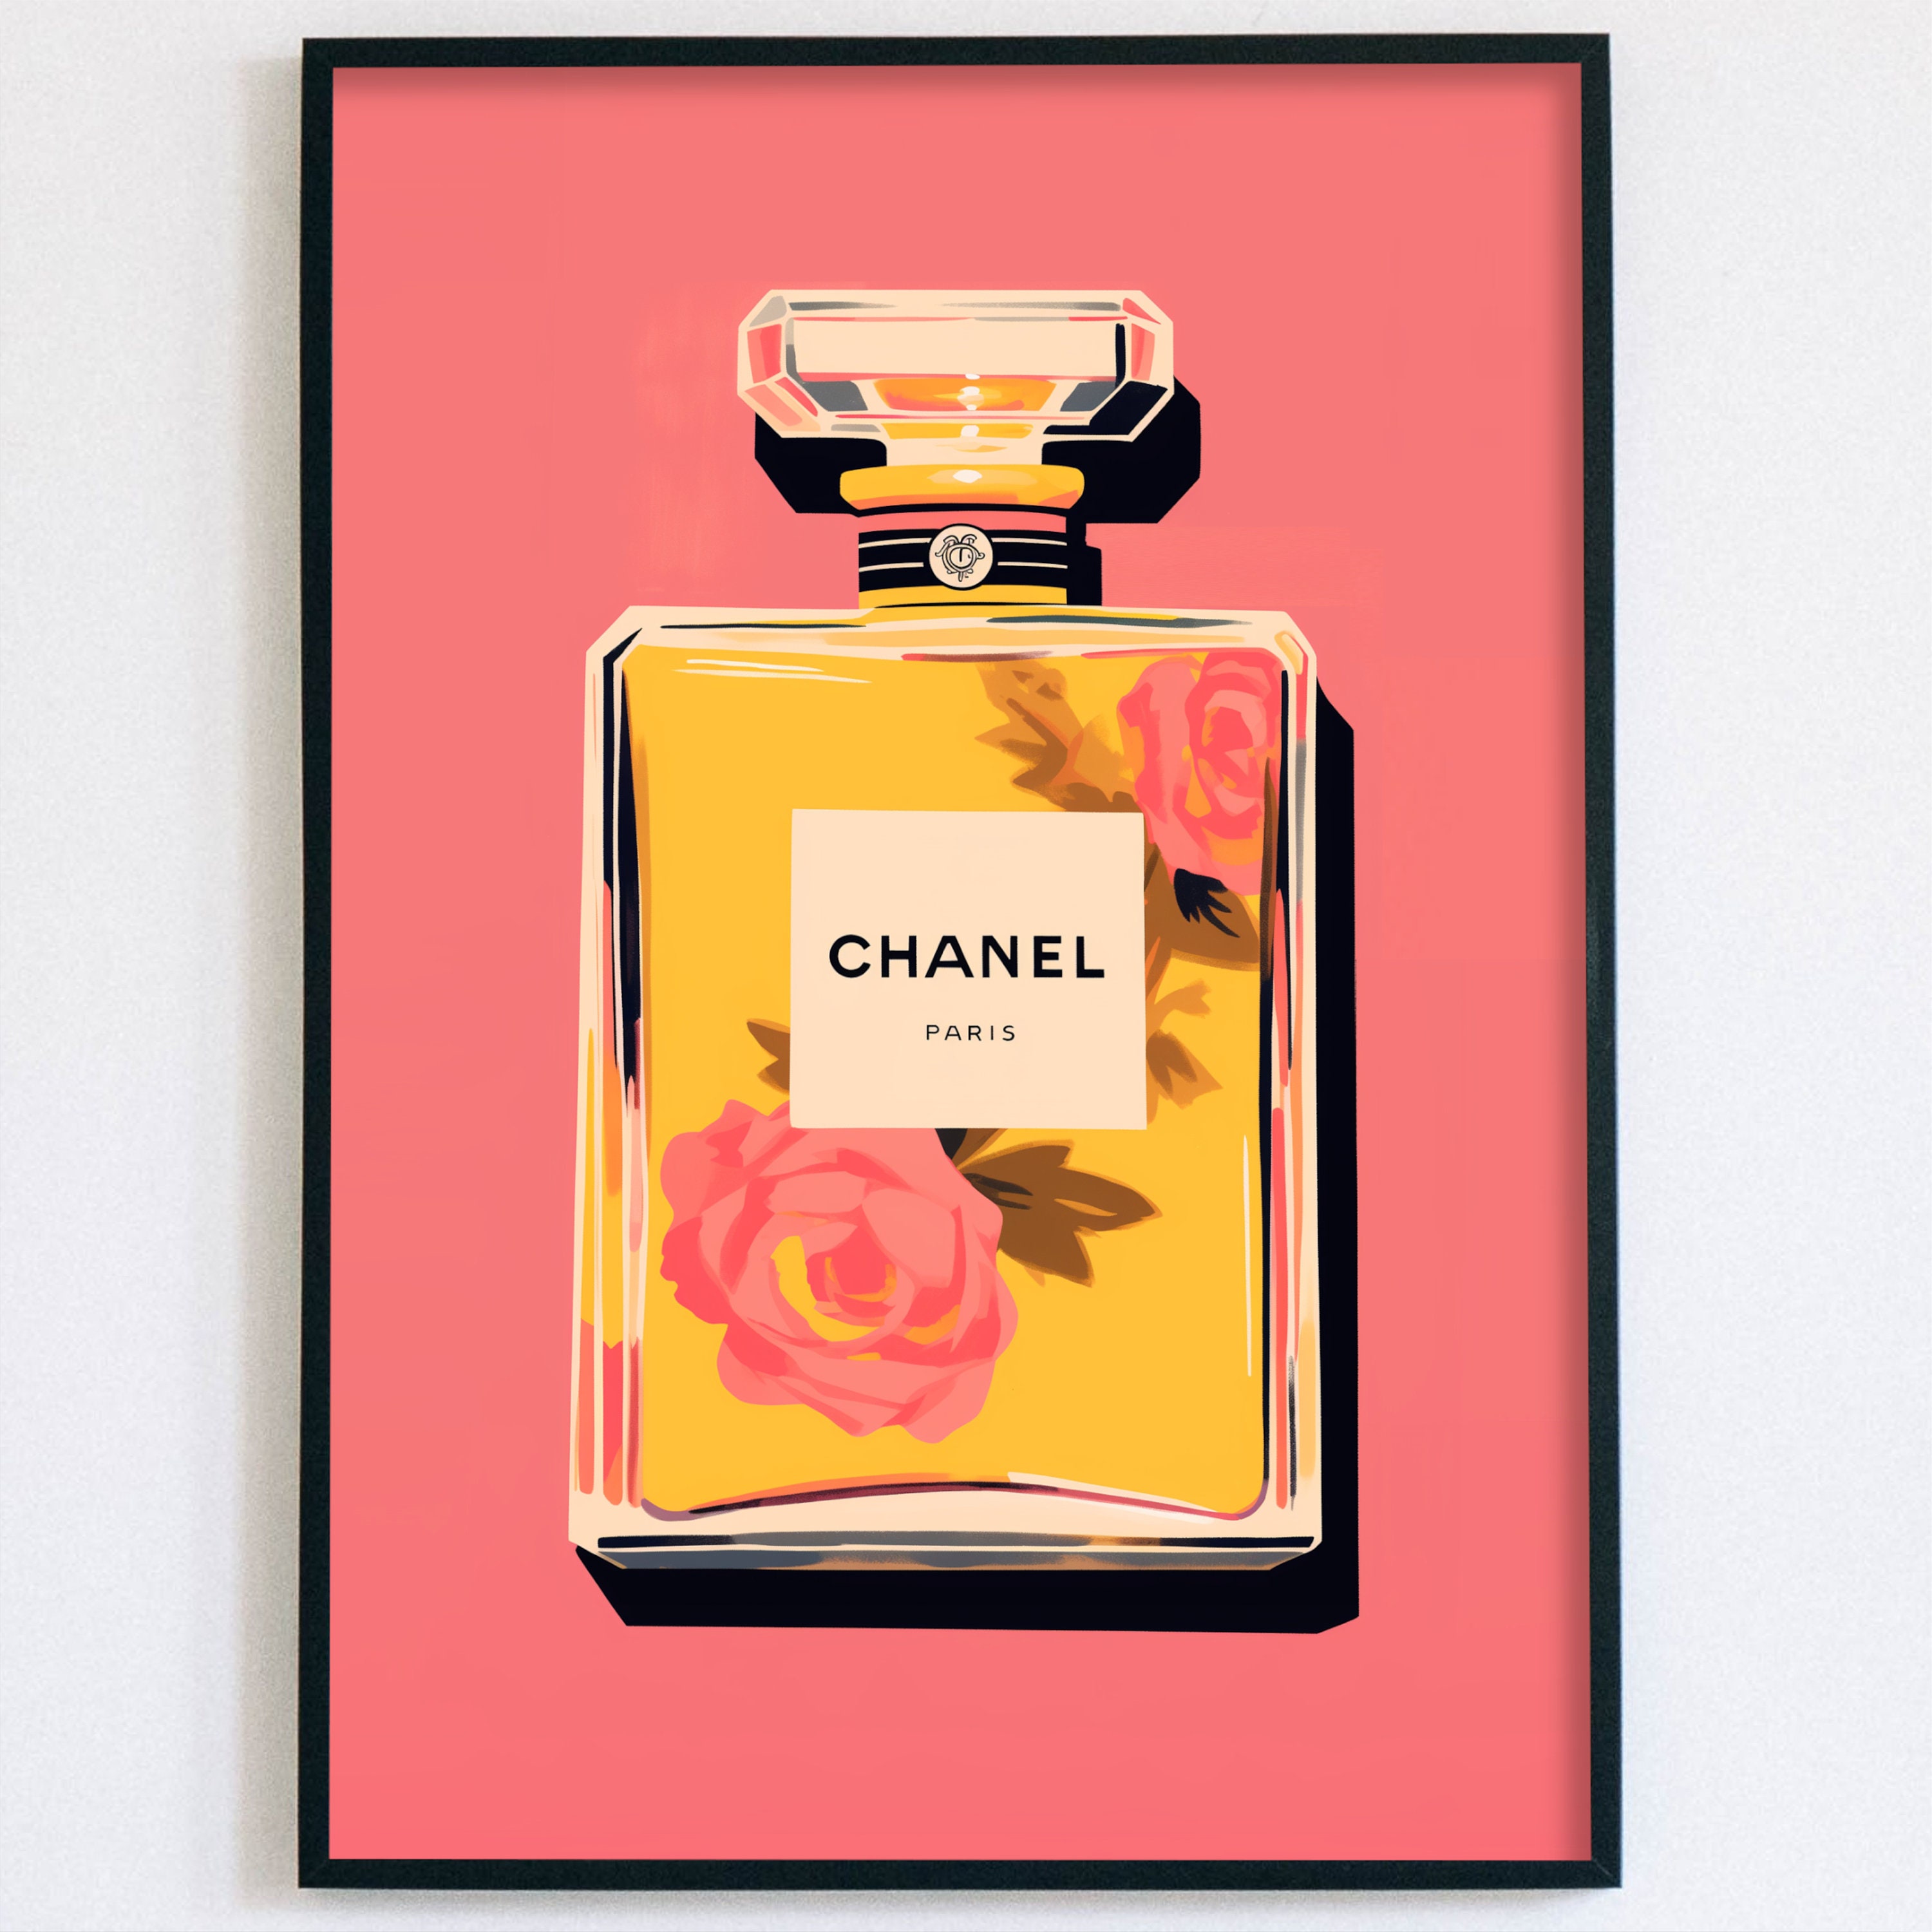 Coffee Chanel No 5 affiche (29,7x42cm) - Fashion - affiche - impression -  Wallified